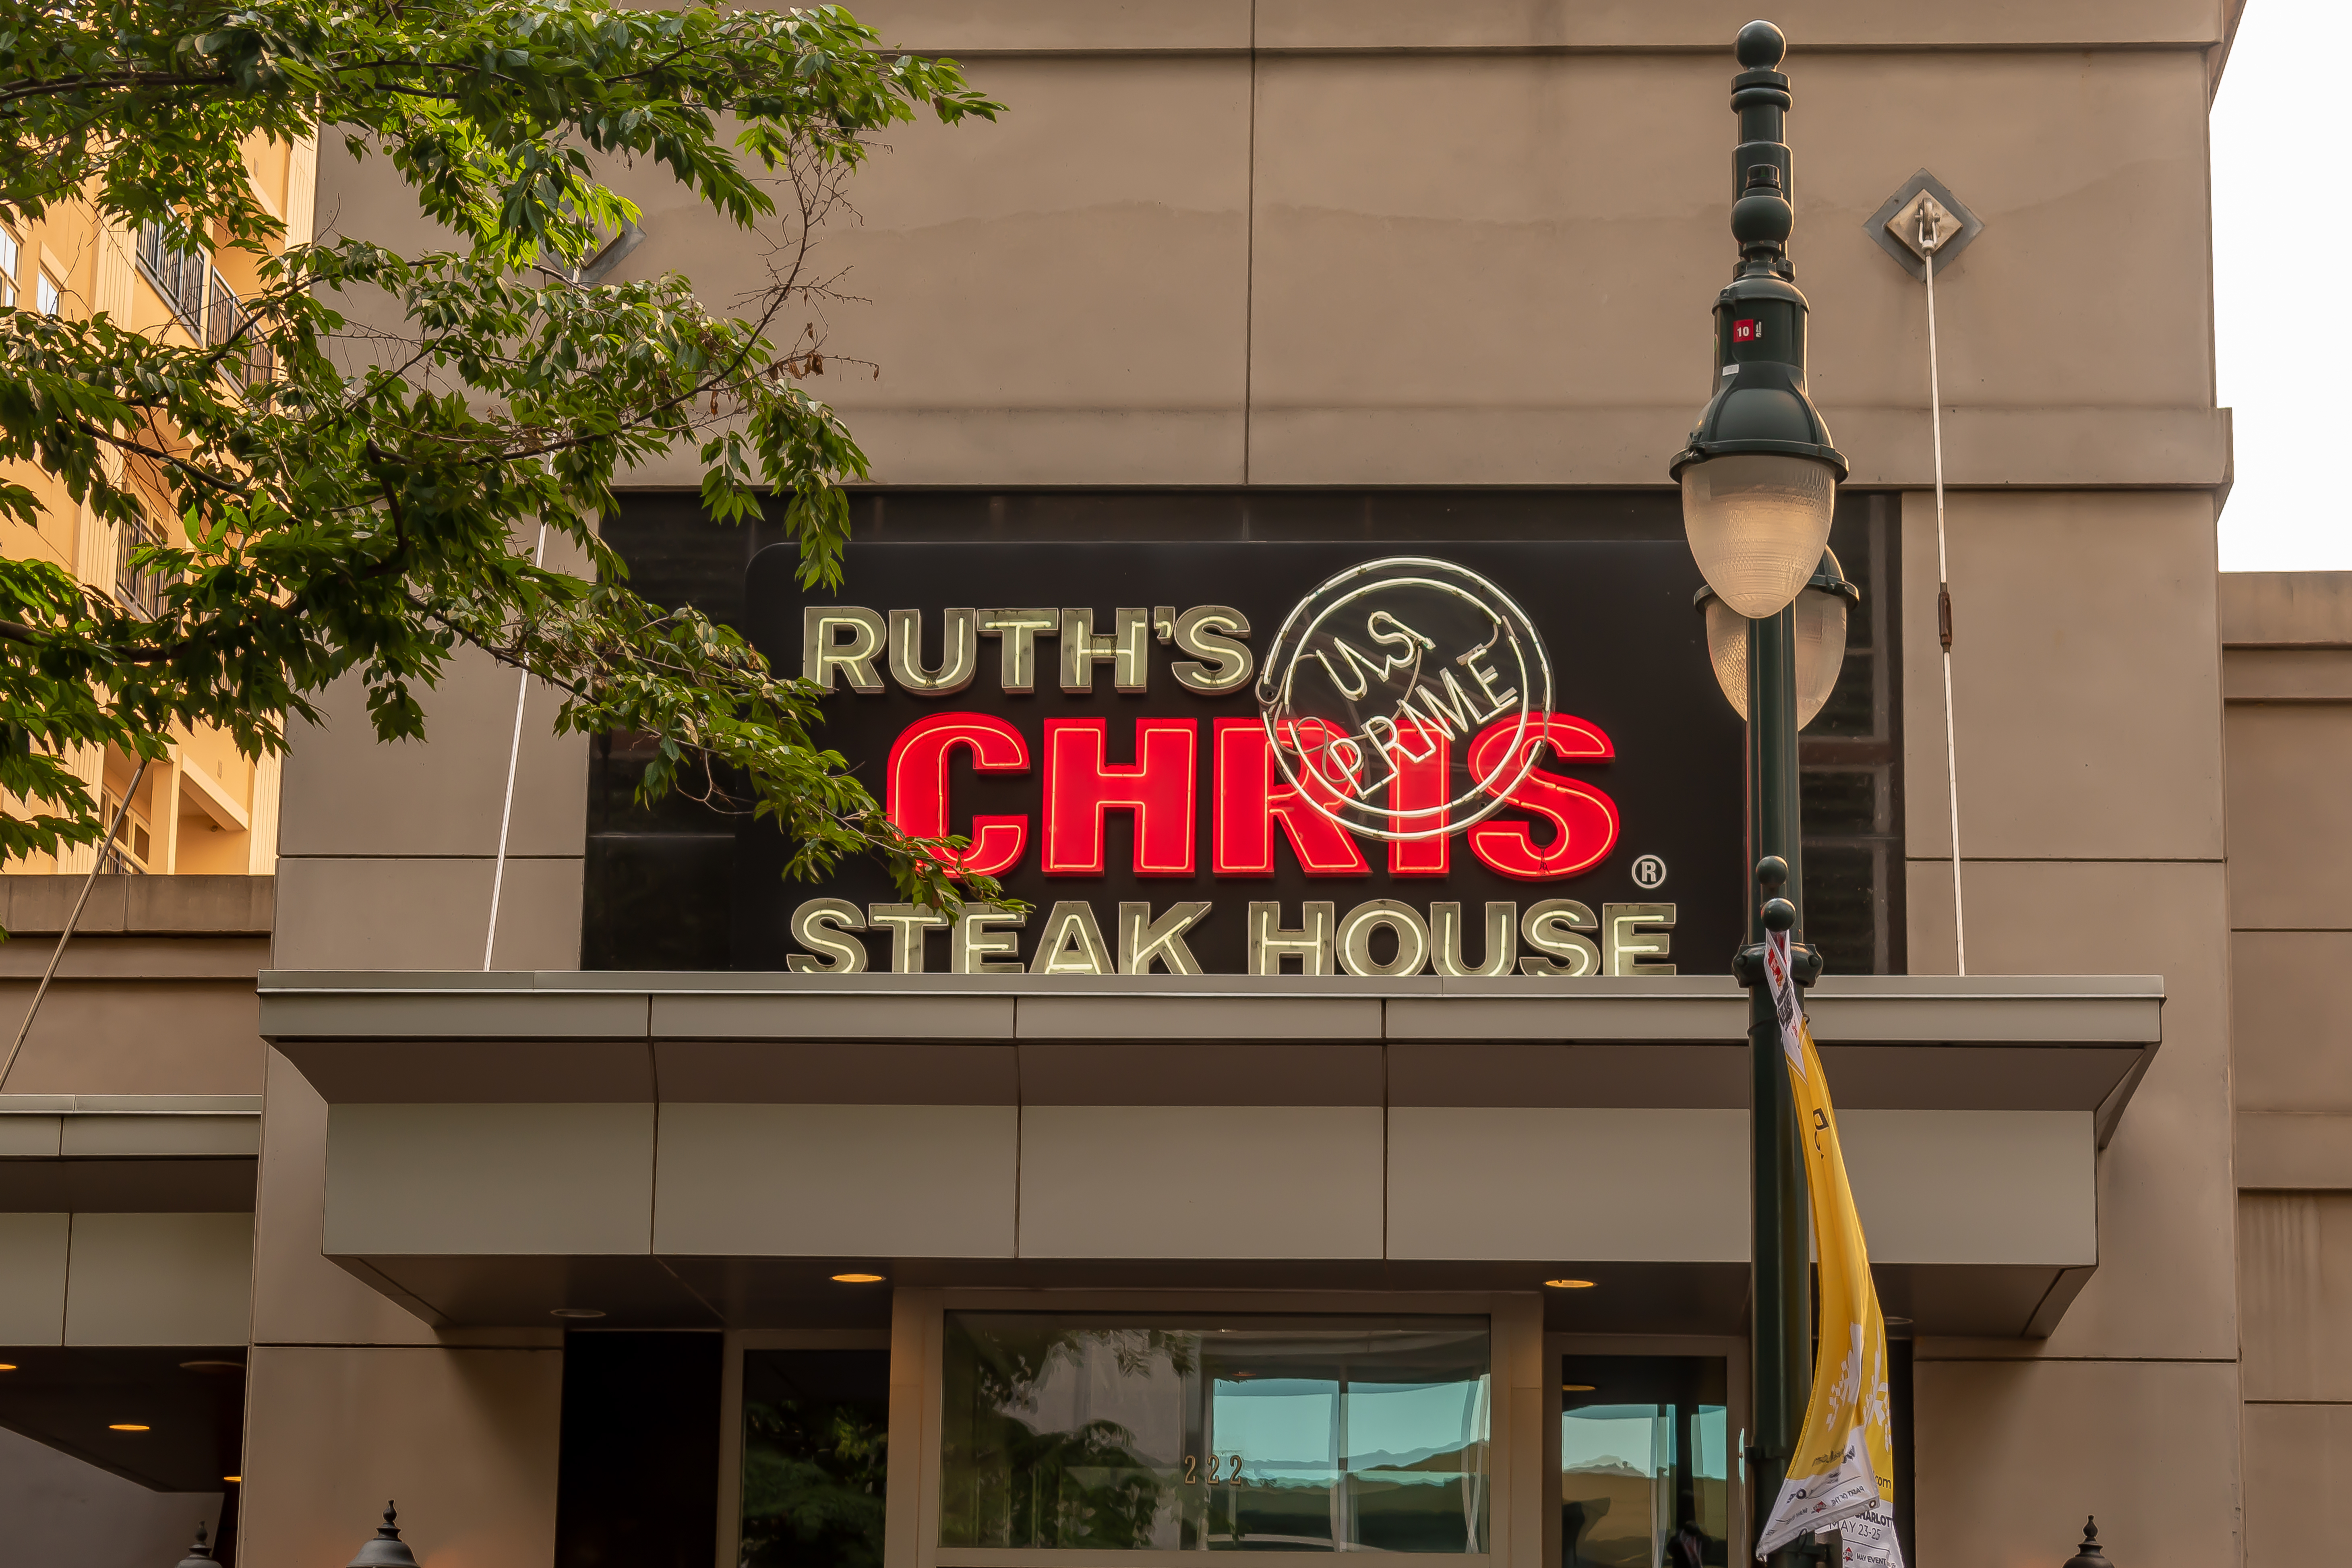 Ruth’s Chris Steak House exterior.